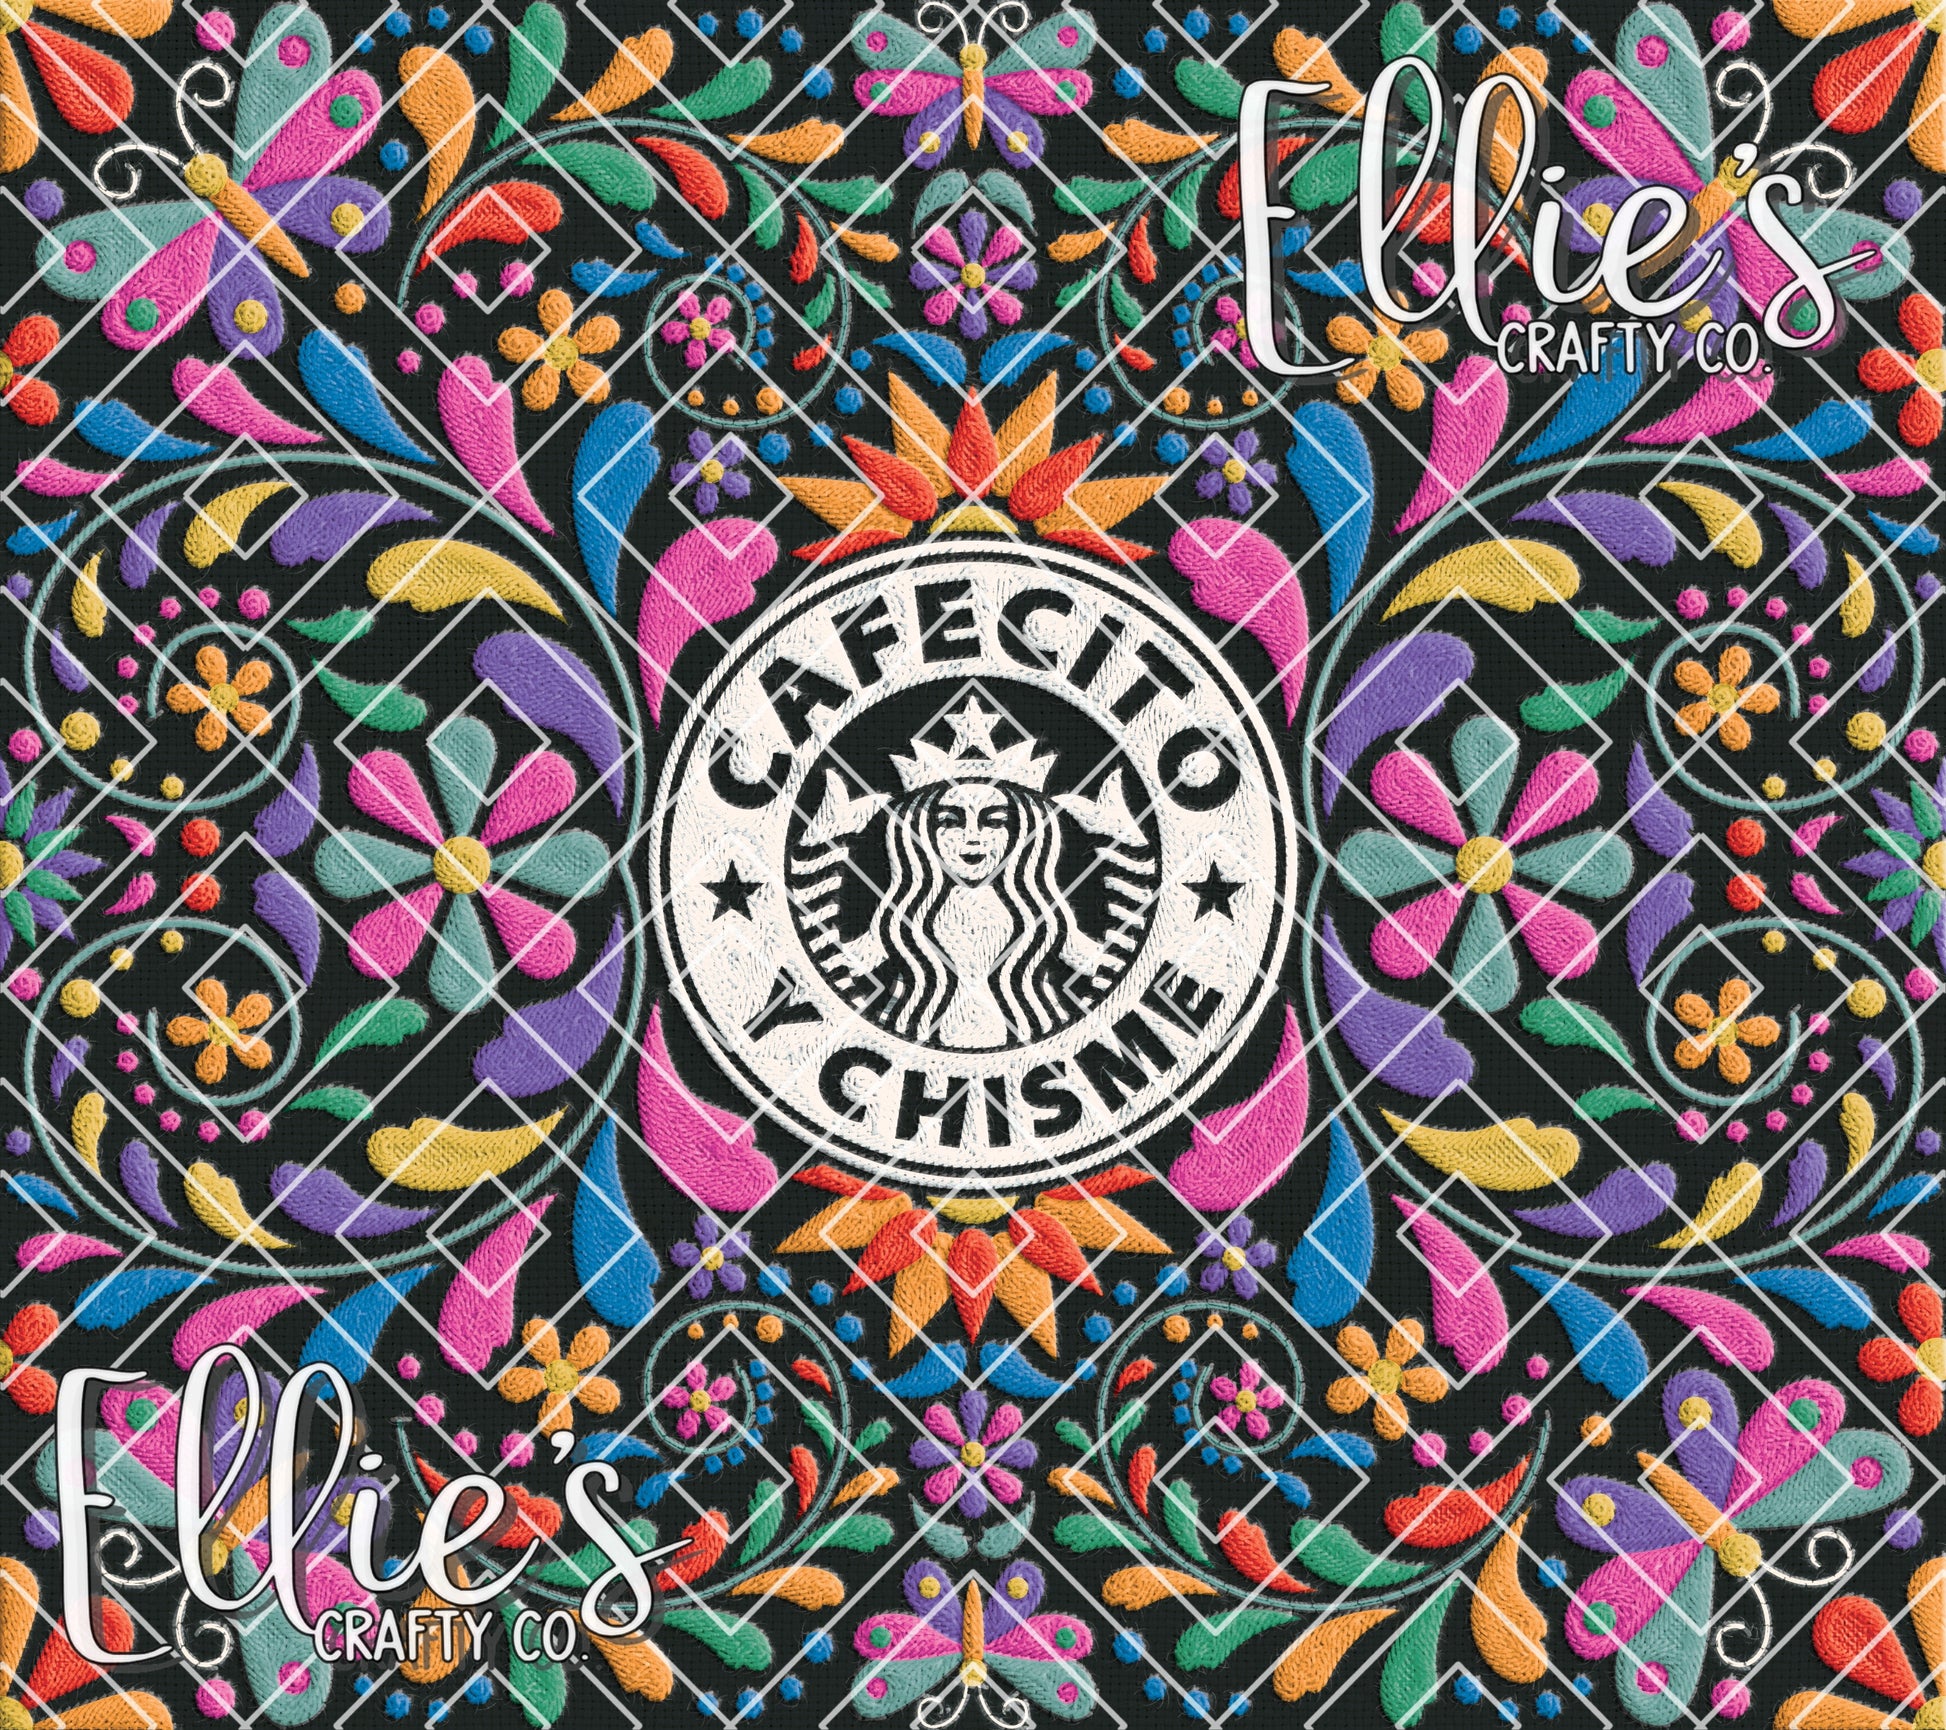 Cafecito y Chisme Starbucks Cup – Brown Sugar Sweet Tees